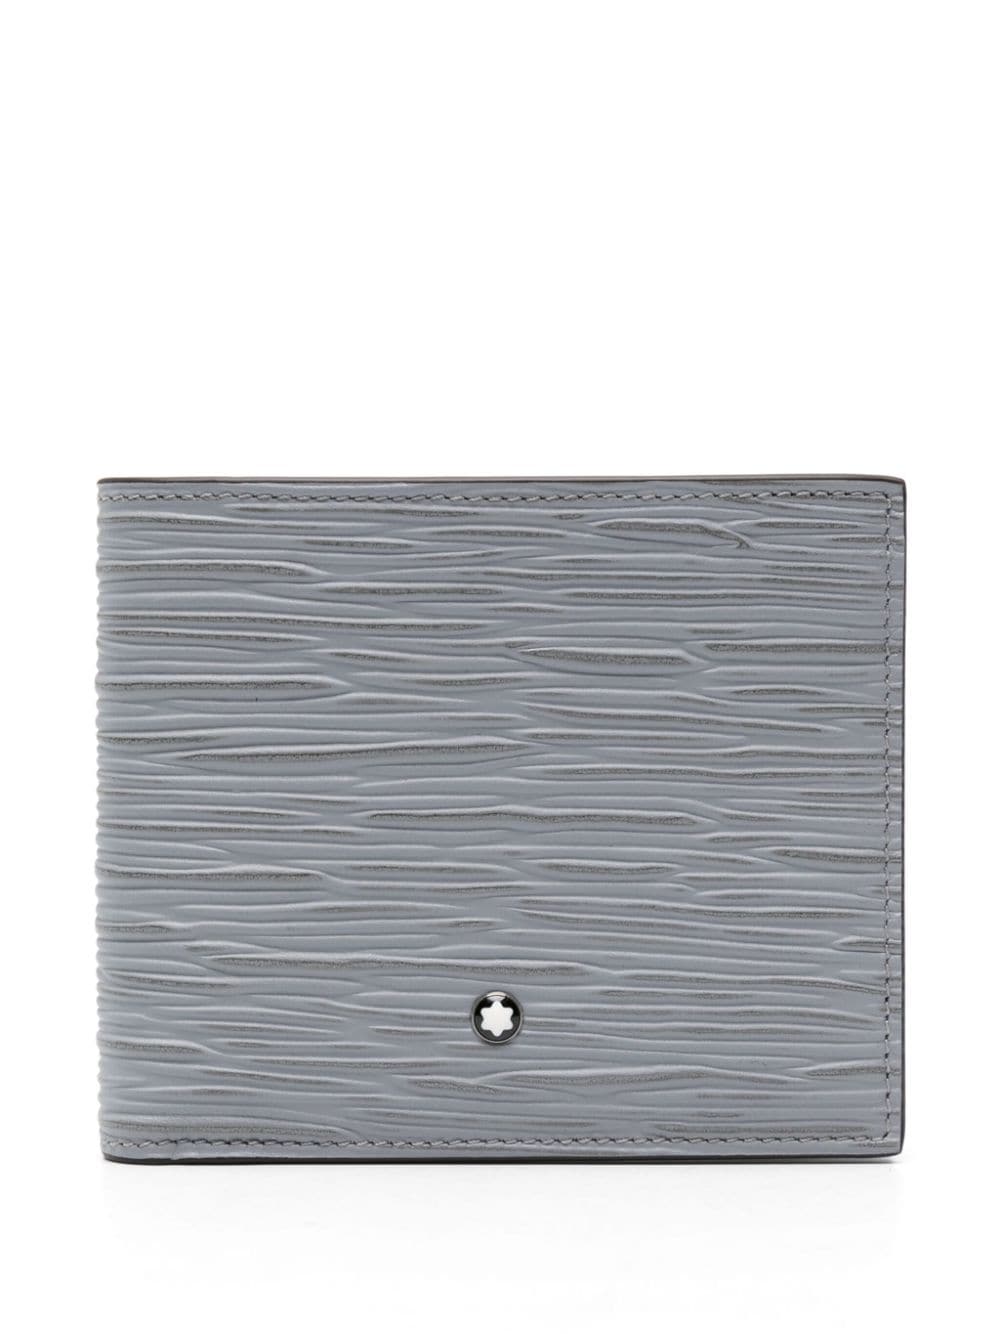 Montblanc 4810 leather wallet - Grigio